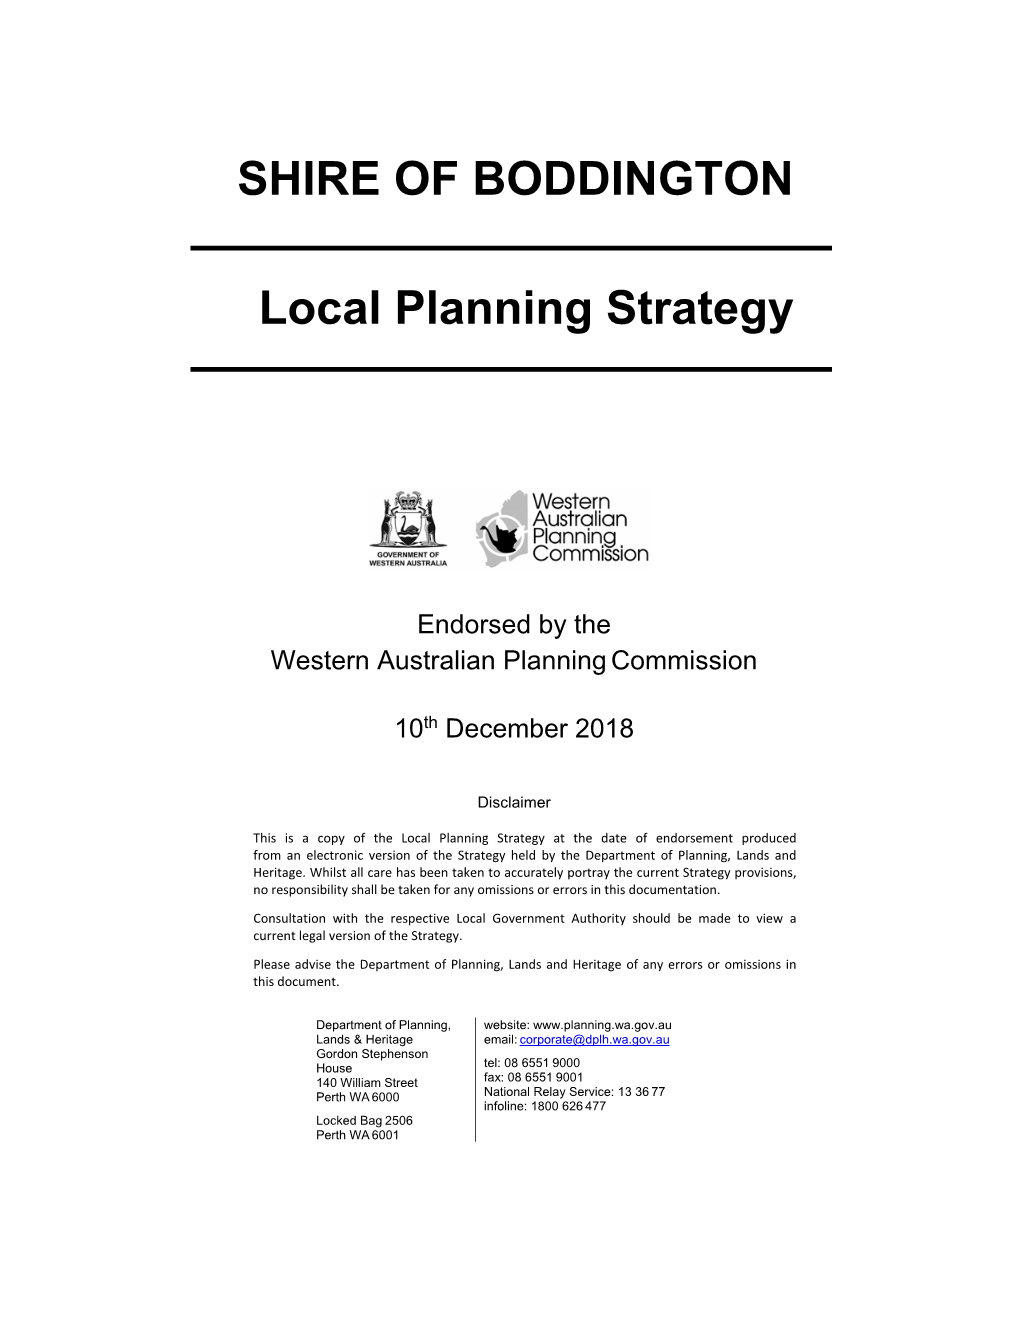 Shire of Boddington Local Planning Strategy